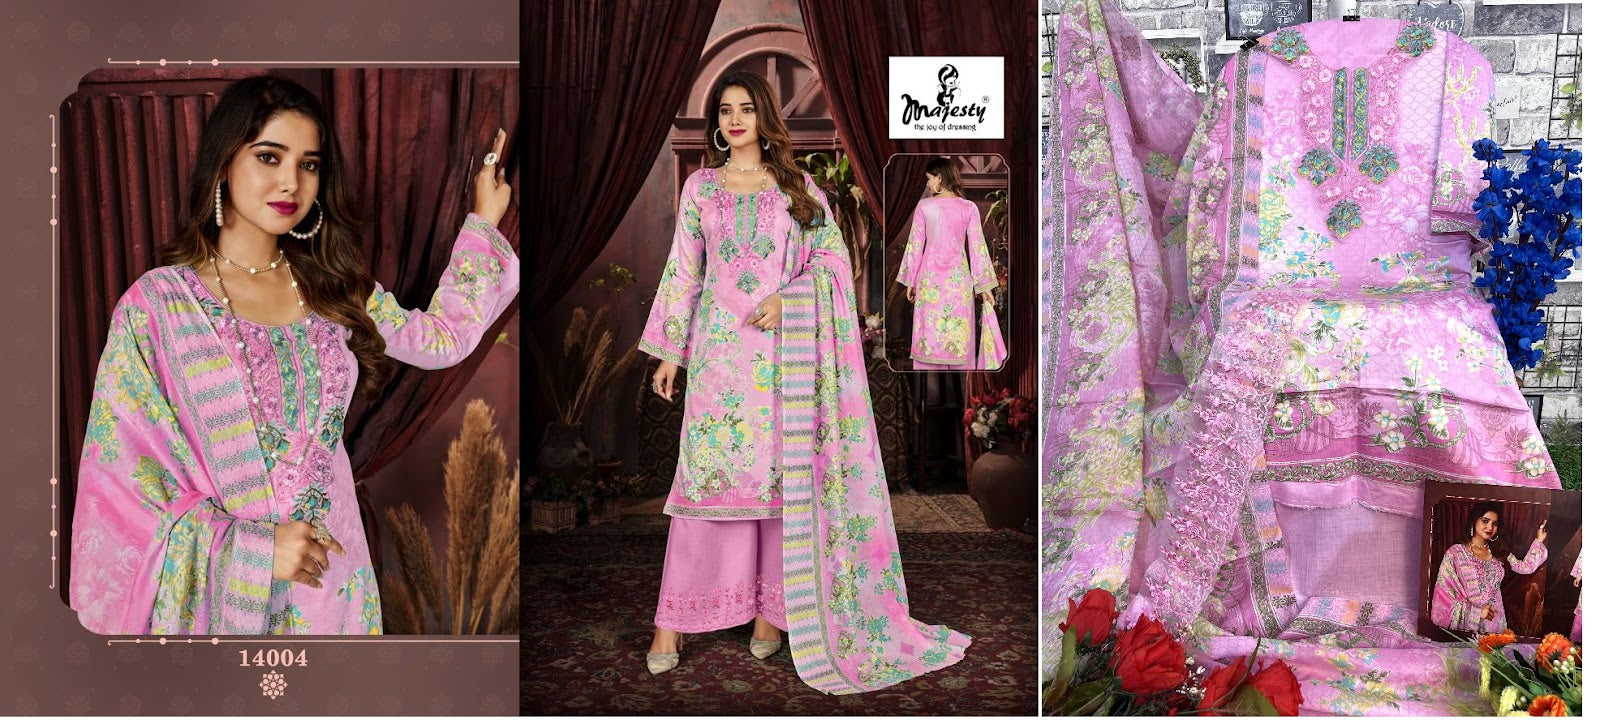 Maria B Lawn Vol 14 Majesty Jaam Cotton Pakistani Patch Work Suits Supplier